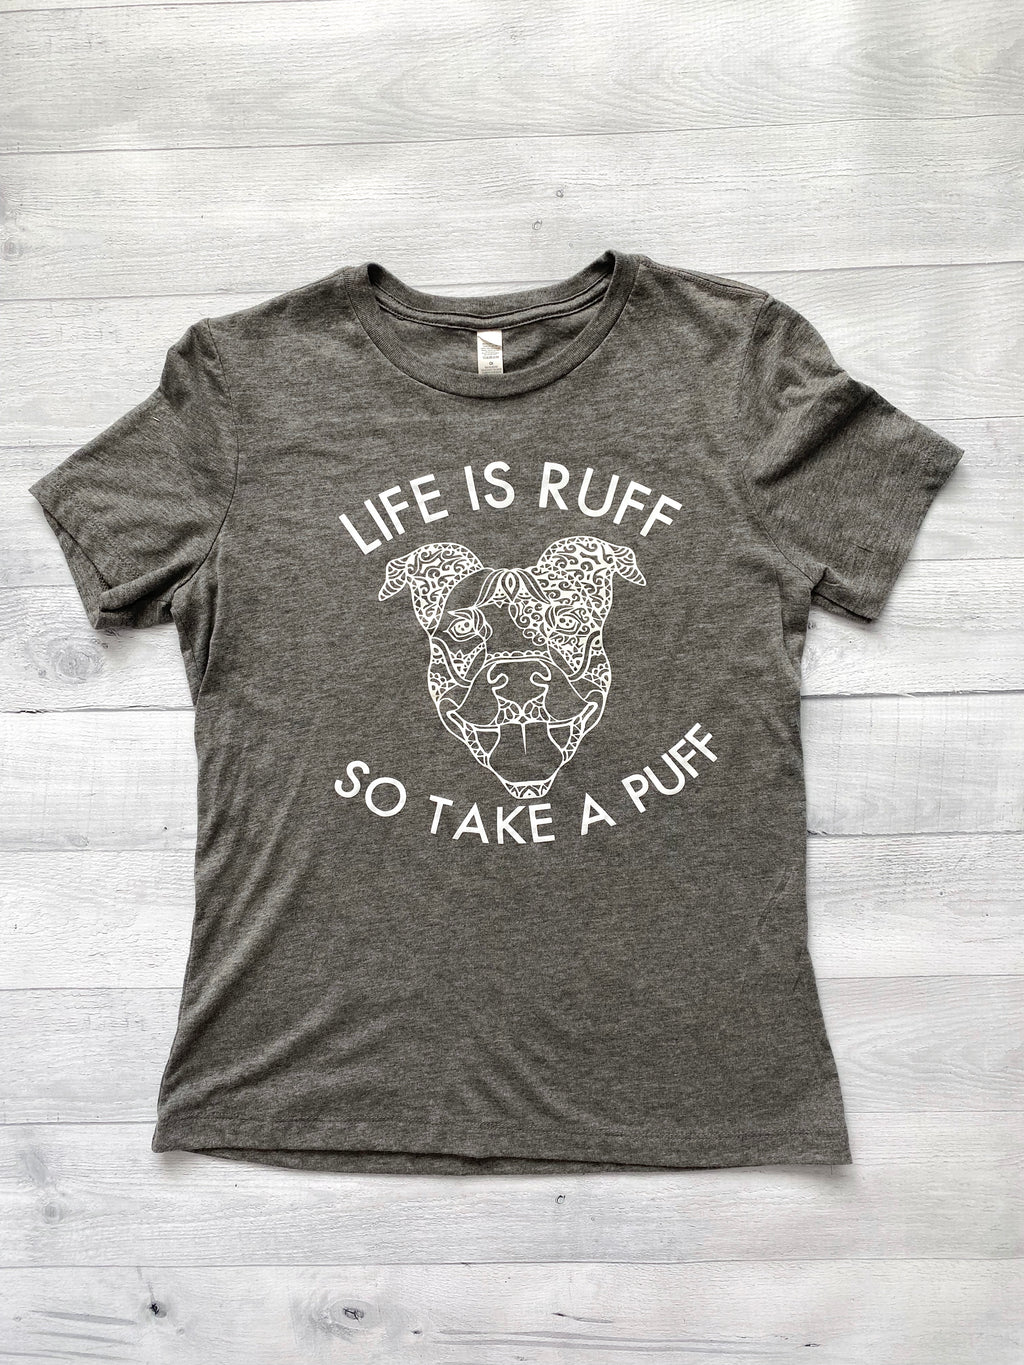 'Life is ruff' T-Shirt